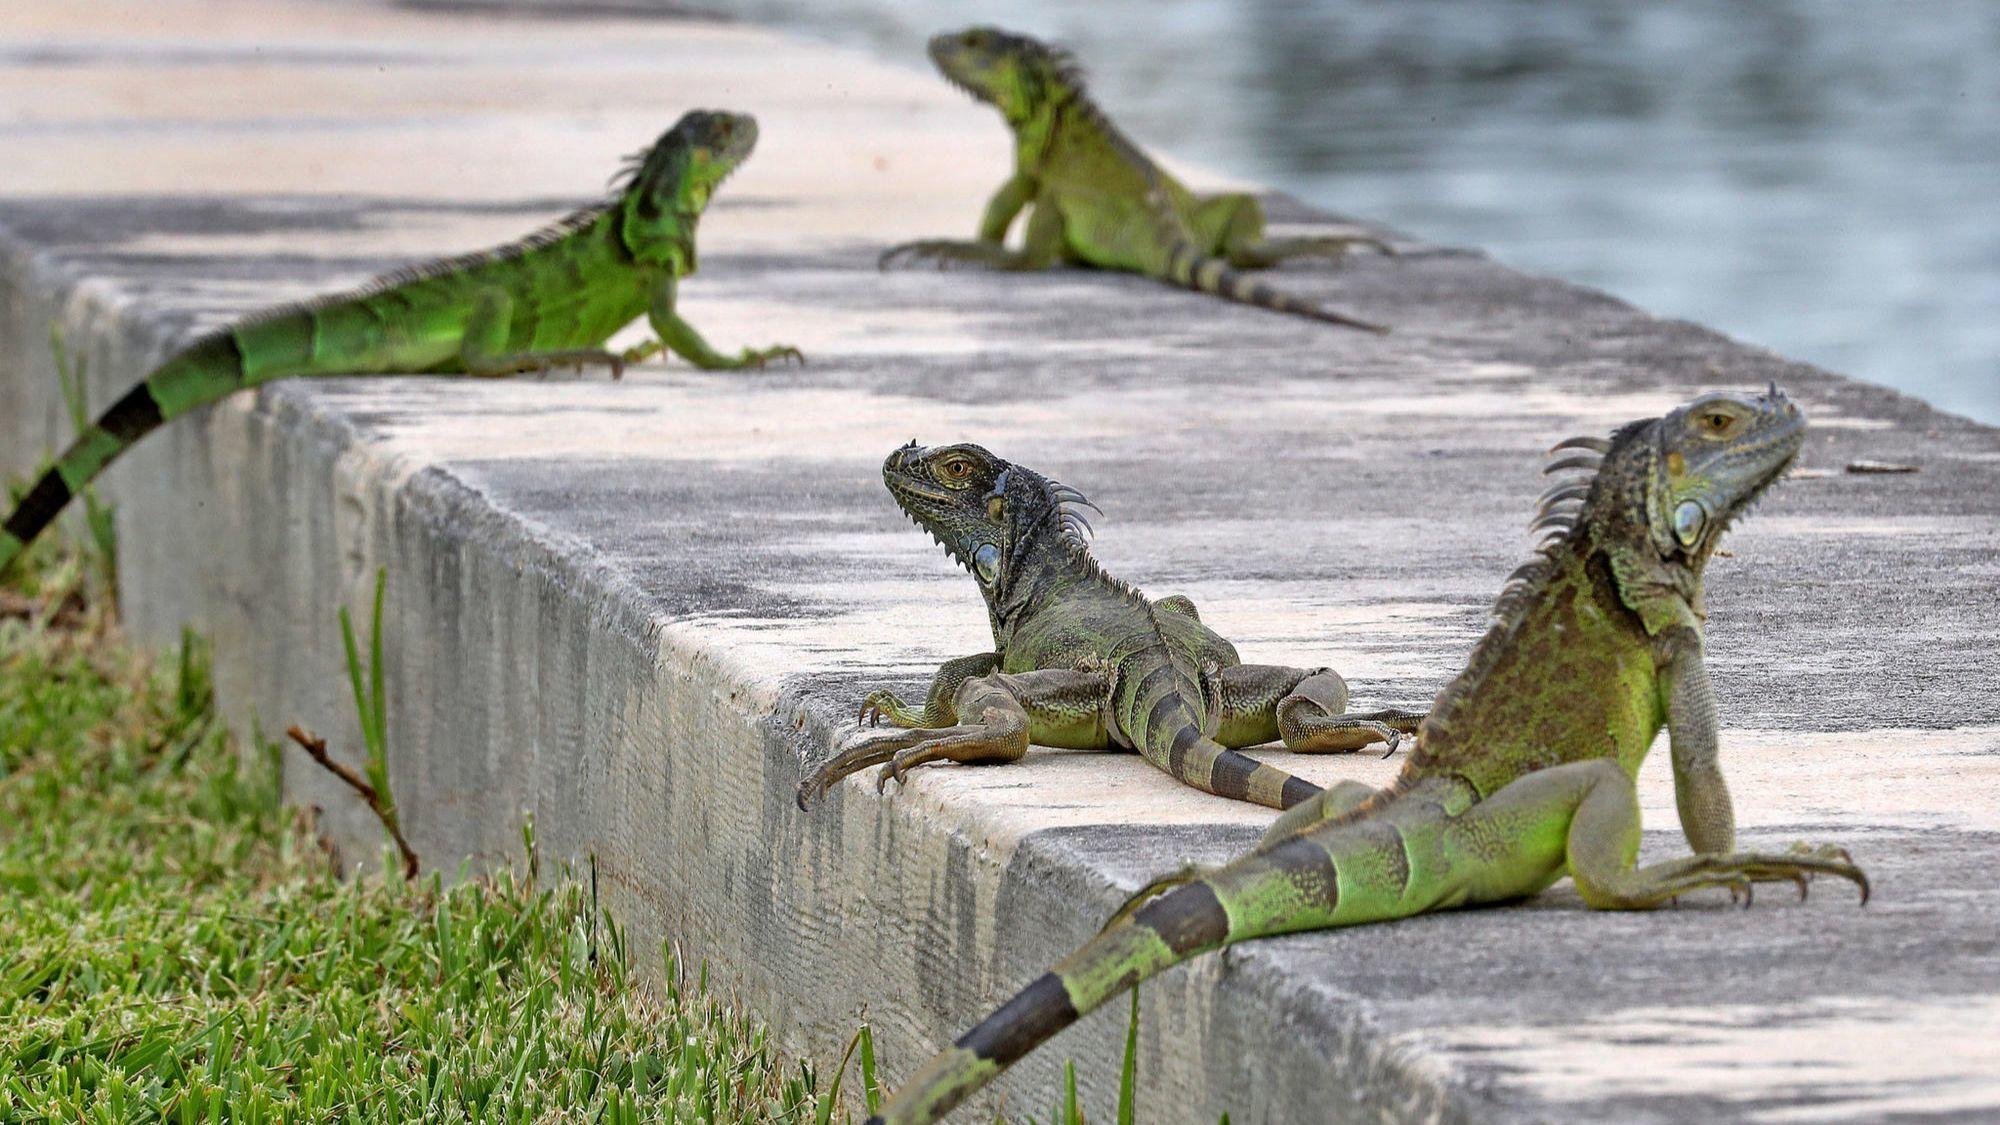 Out of control iguanas infesting South Florida - The San Diego Union-Tribune2000 x 1125